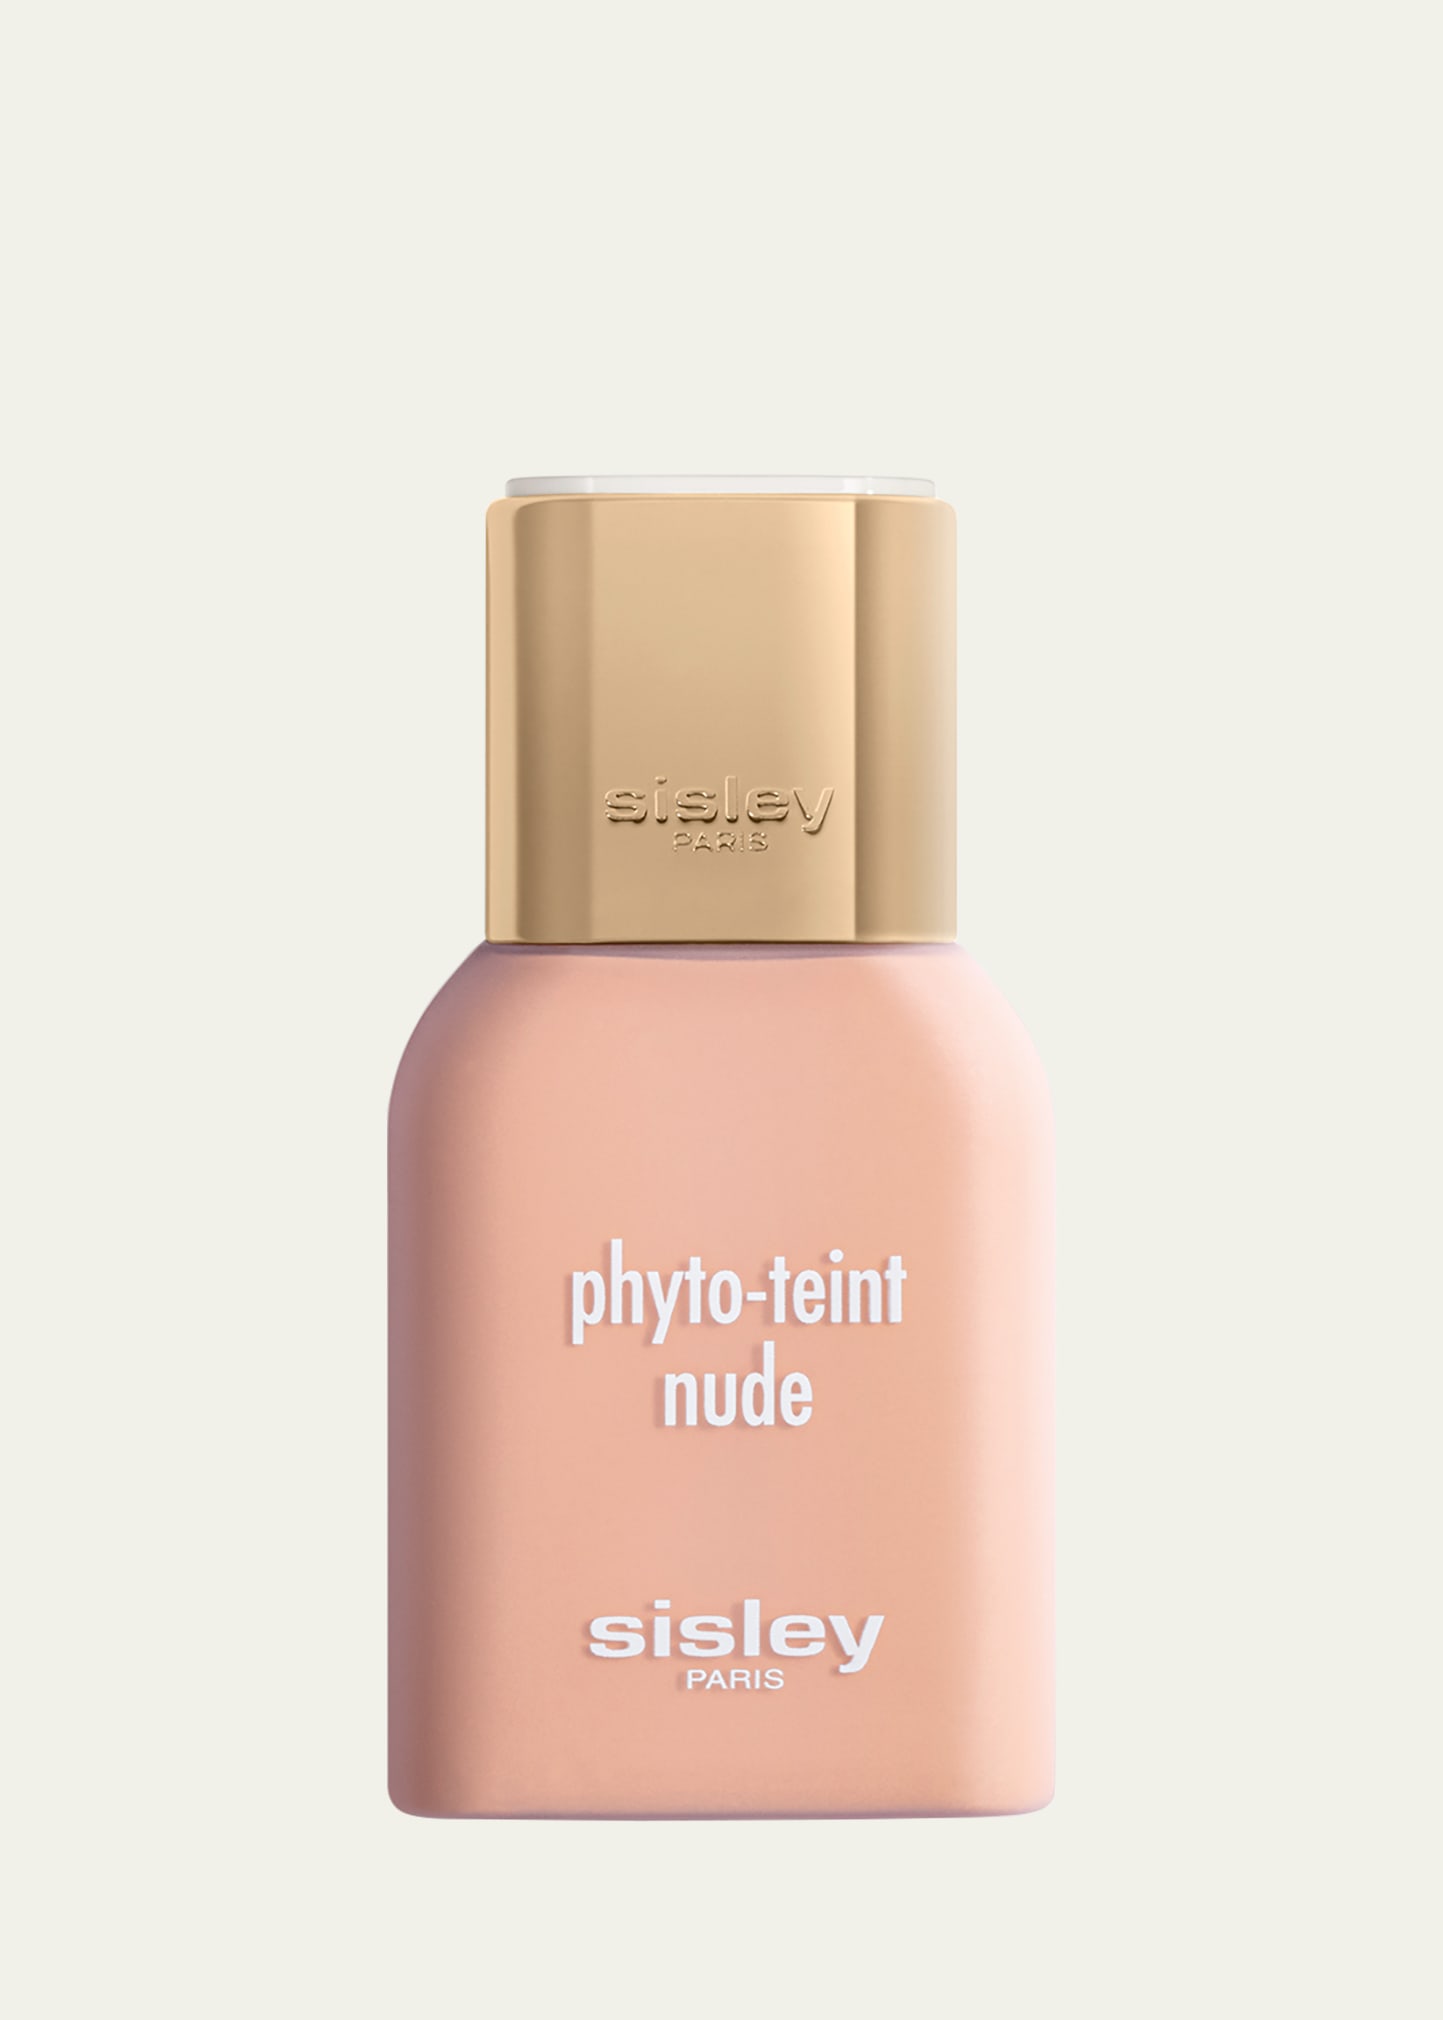 Phyto-Teint Nude